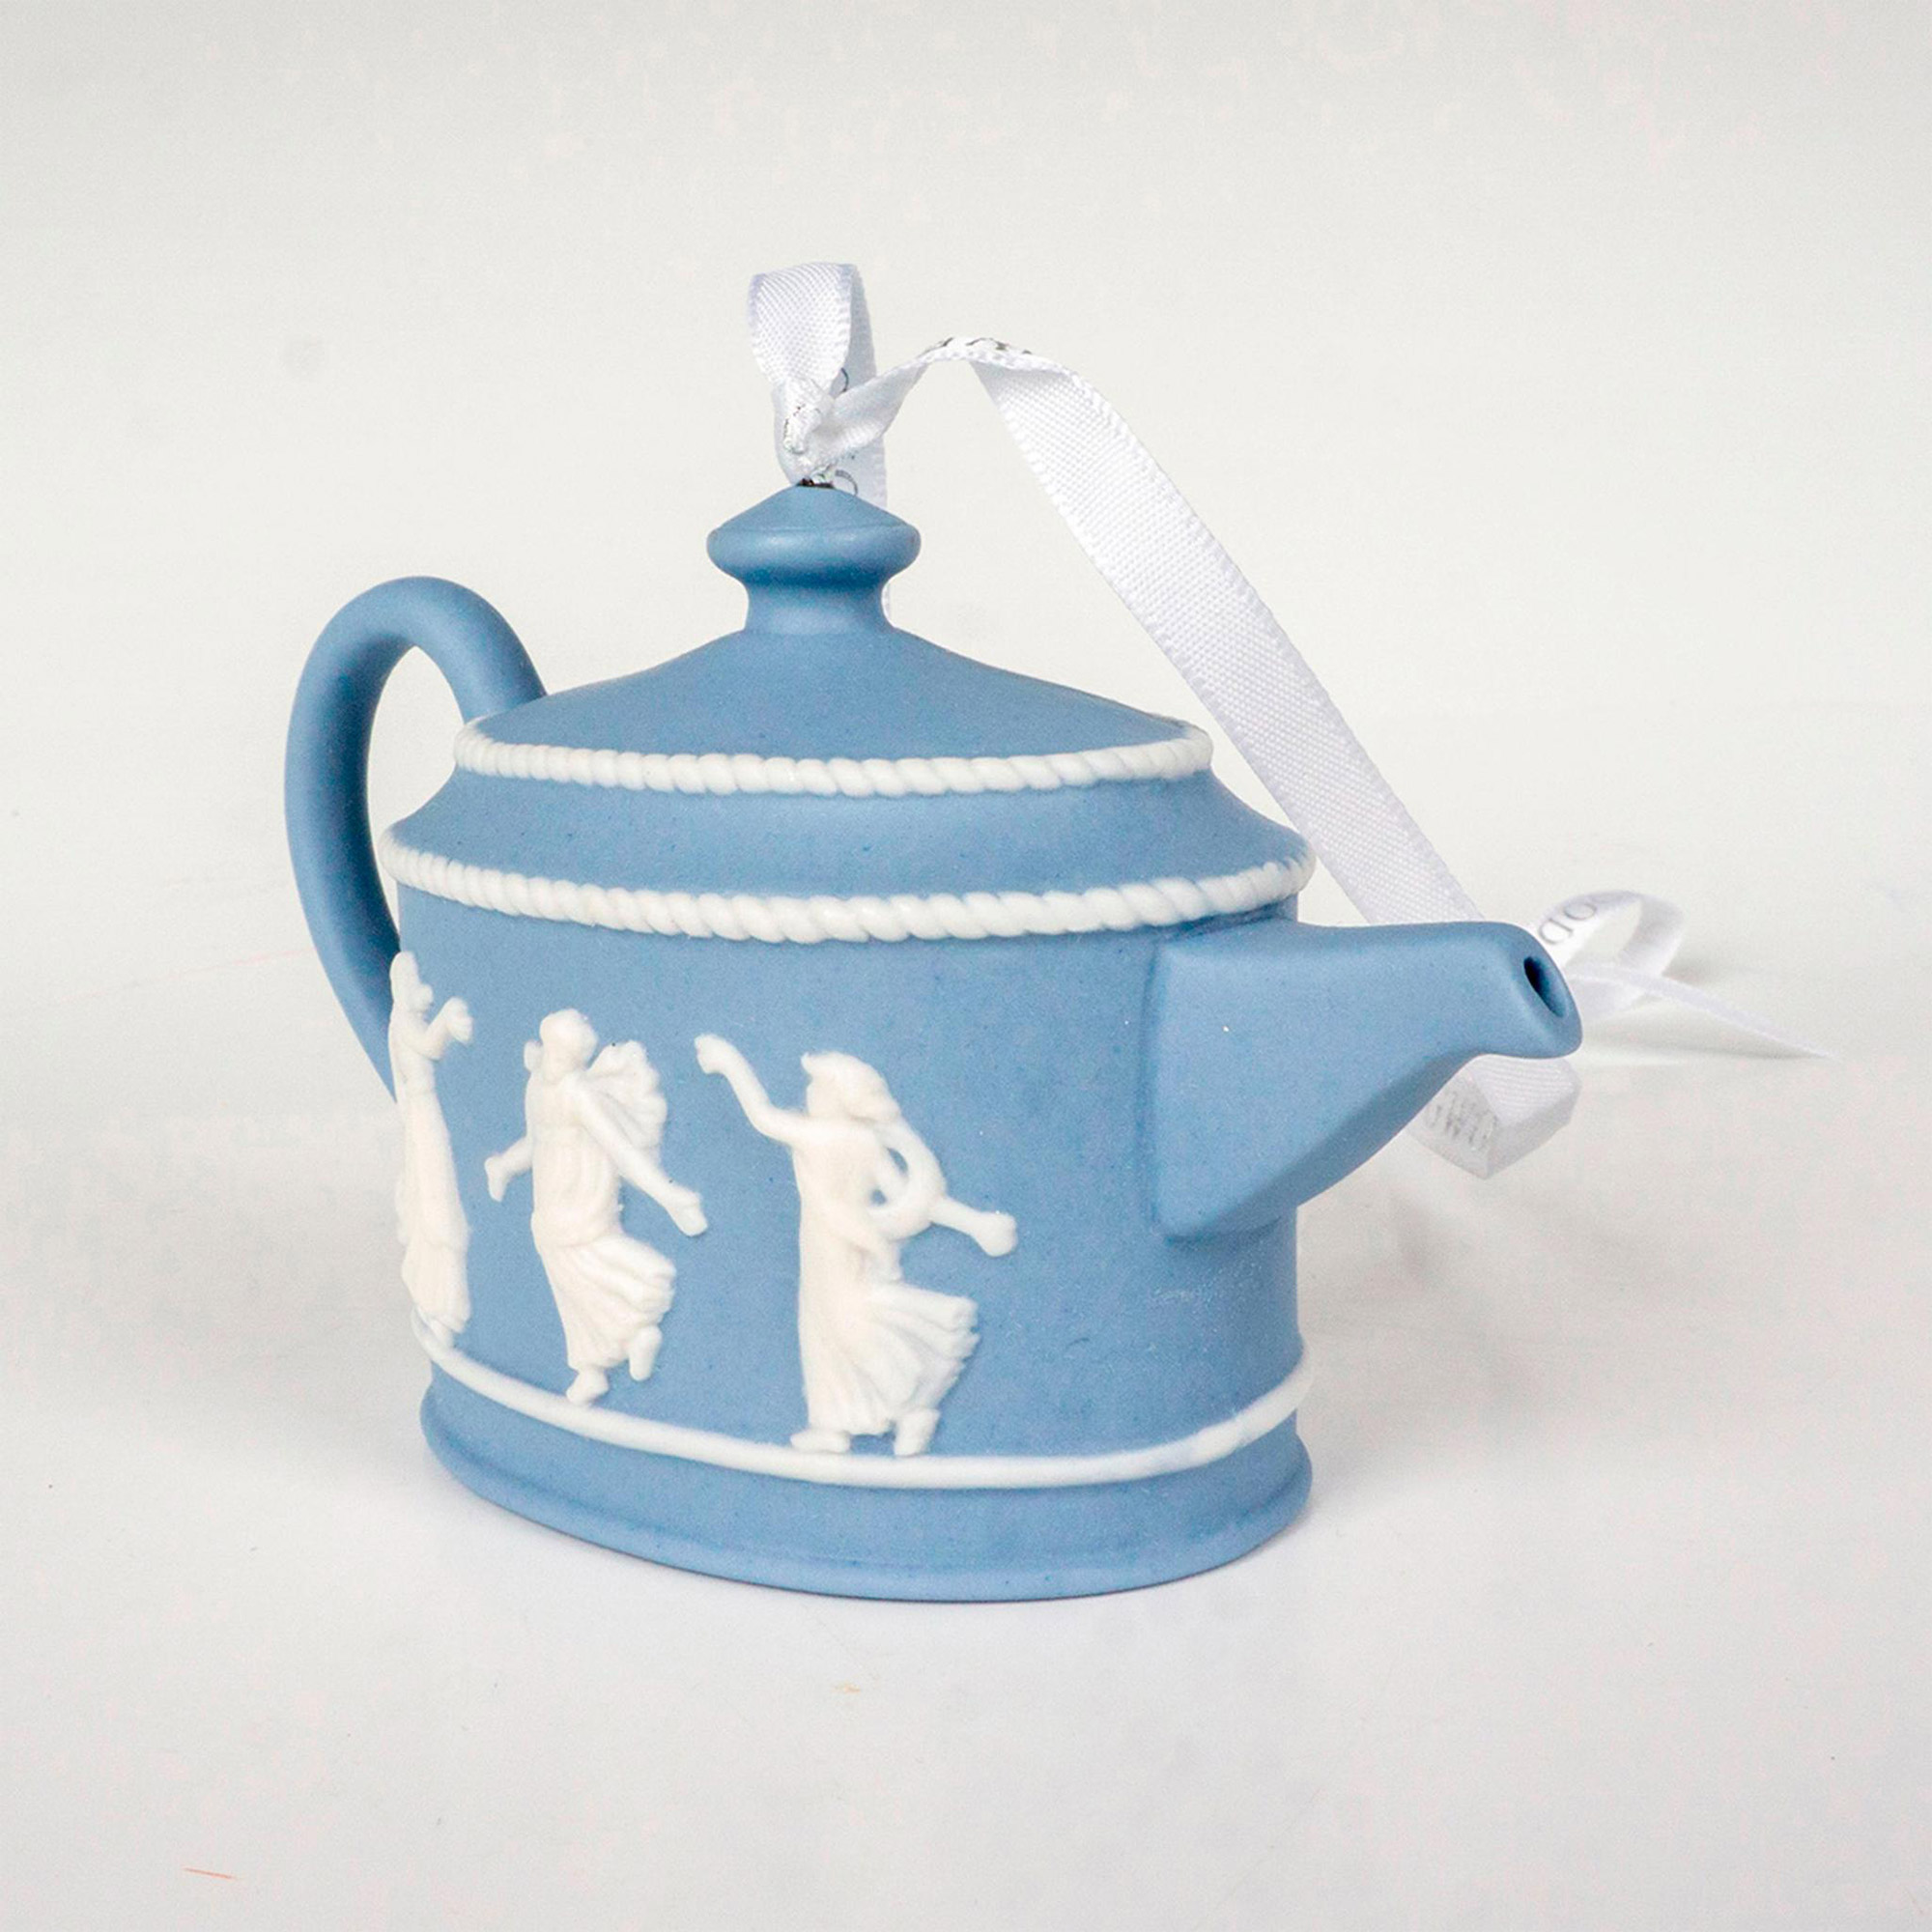 Wedgwood Jasperware Ornament, Teapot - Image 2 of 4